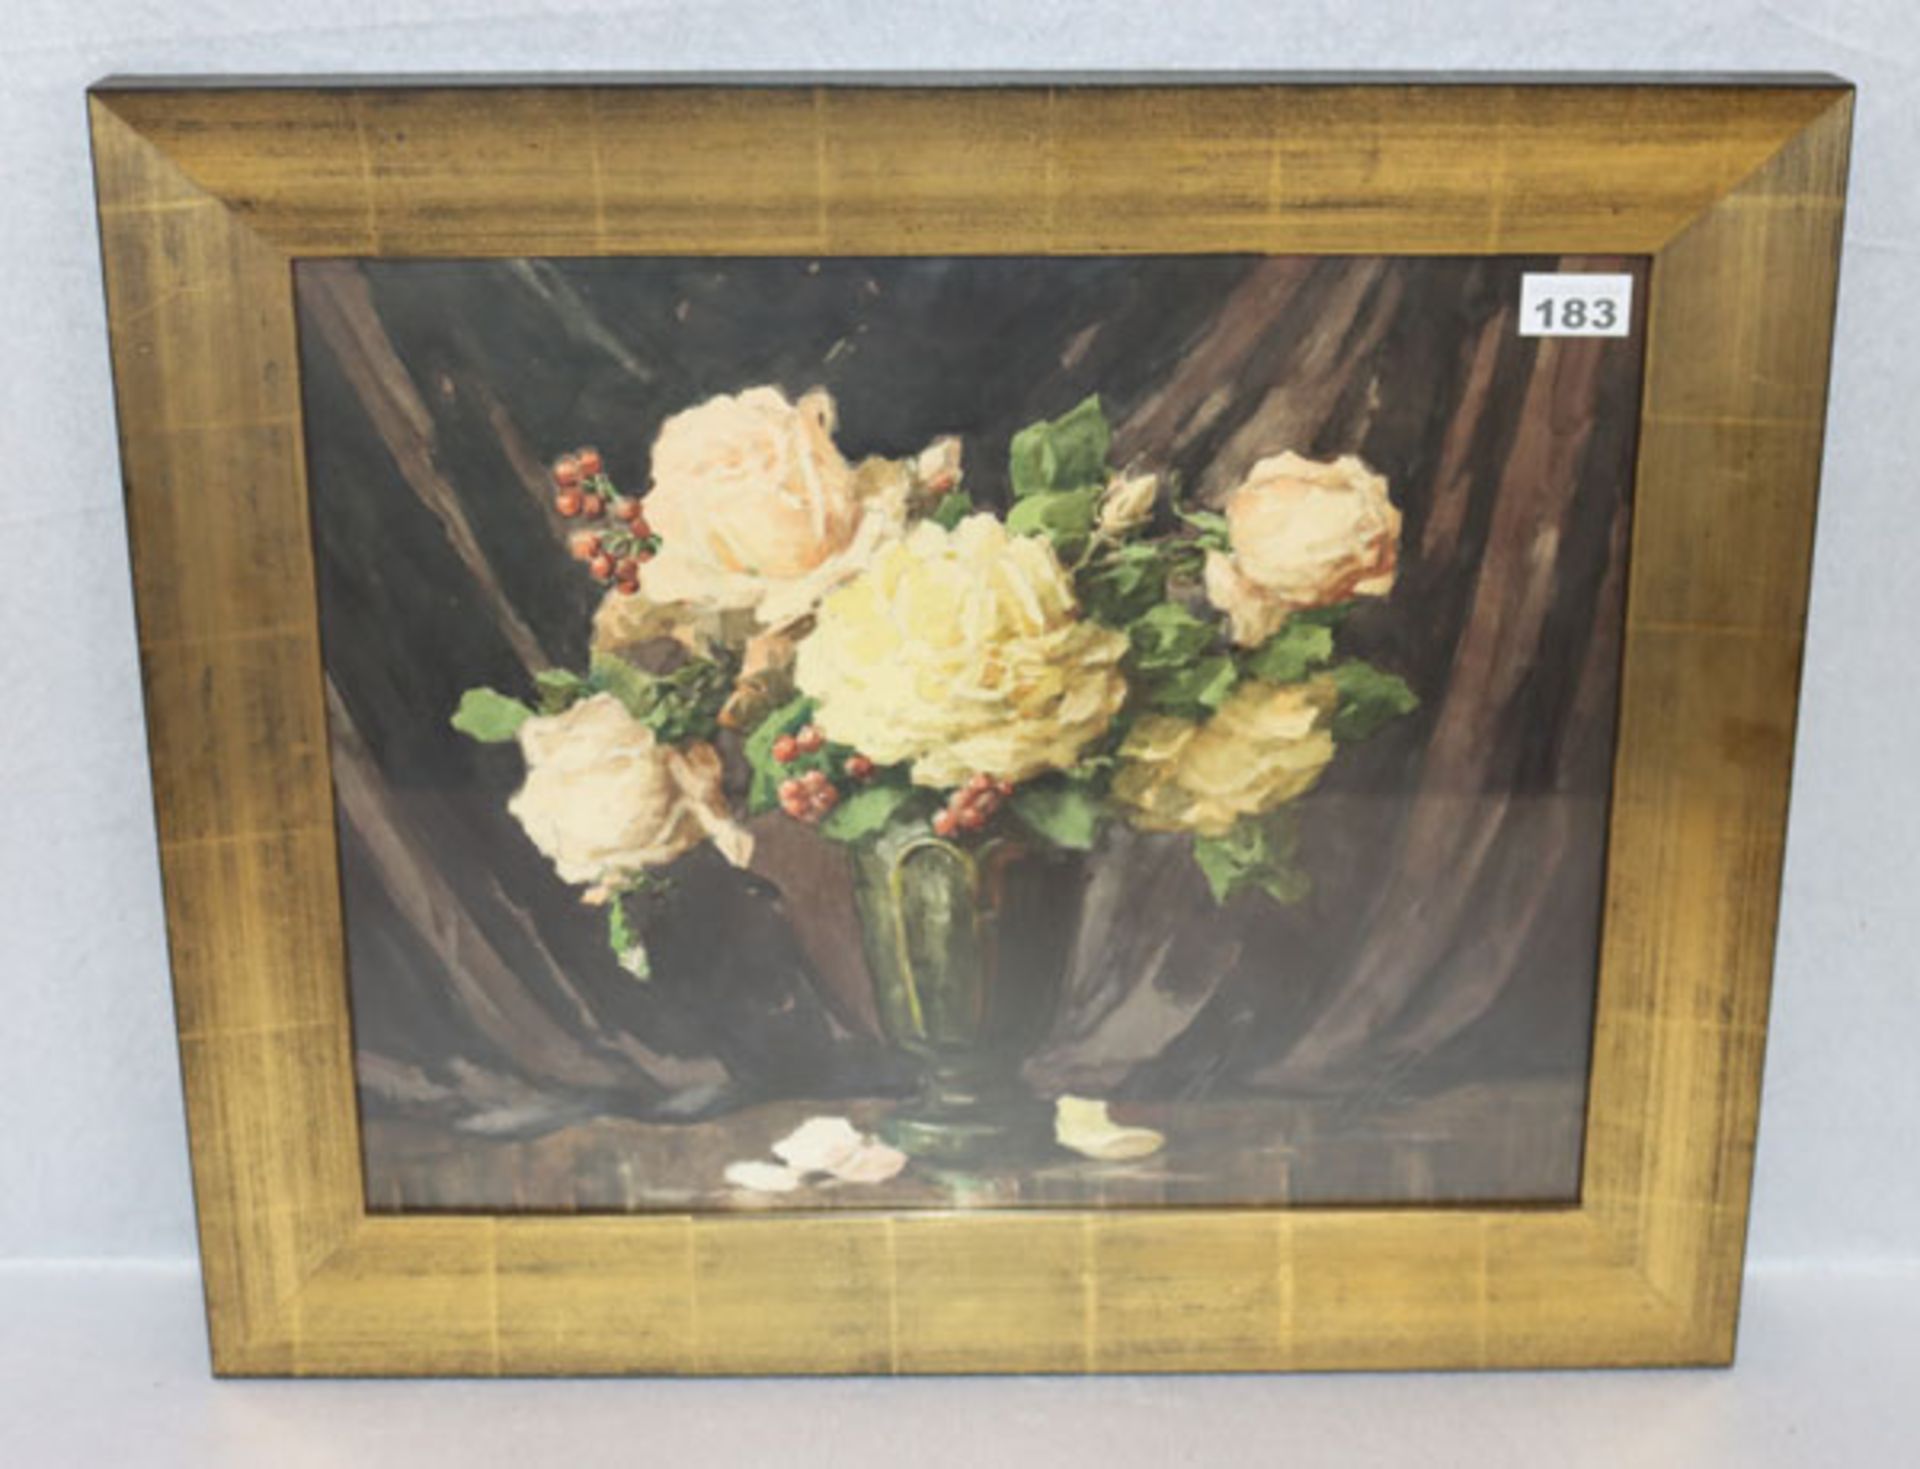 Aquarell 'Gelbe Rosen in Vase', undeutlich signiert Koos ?, unter Glas gerahmt, incl. Rahmen 50 cm x